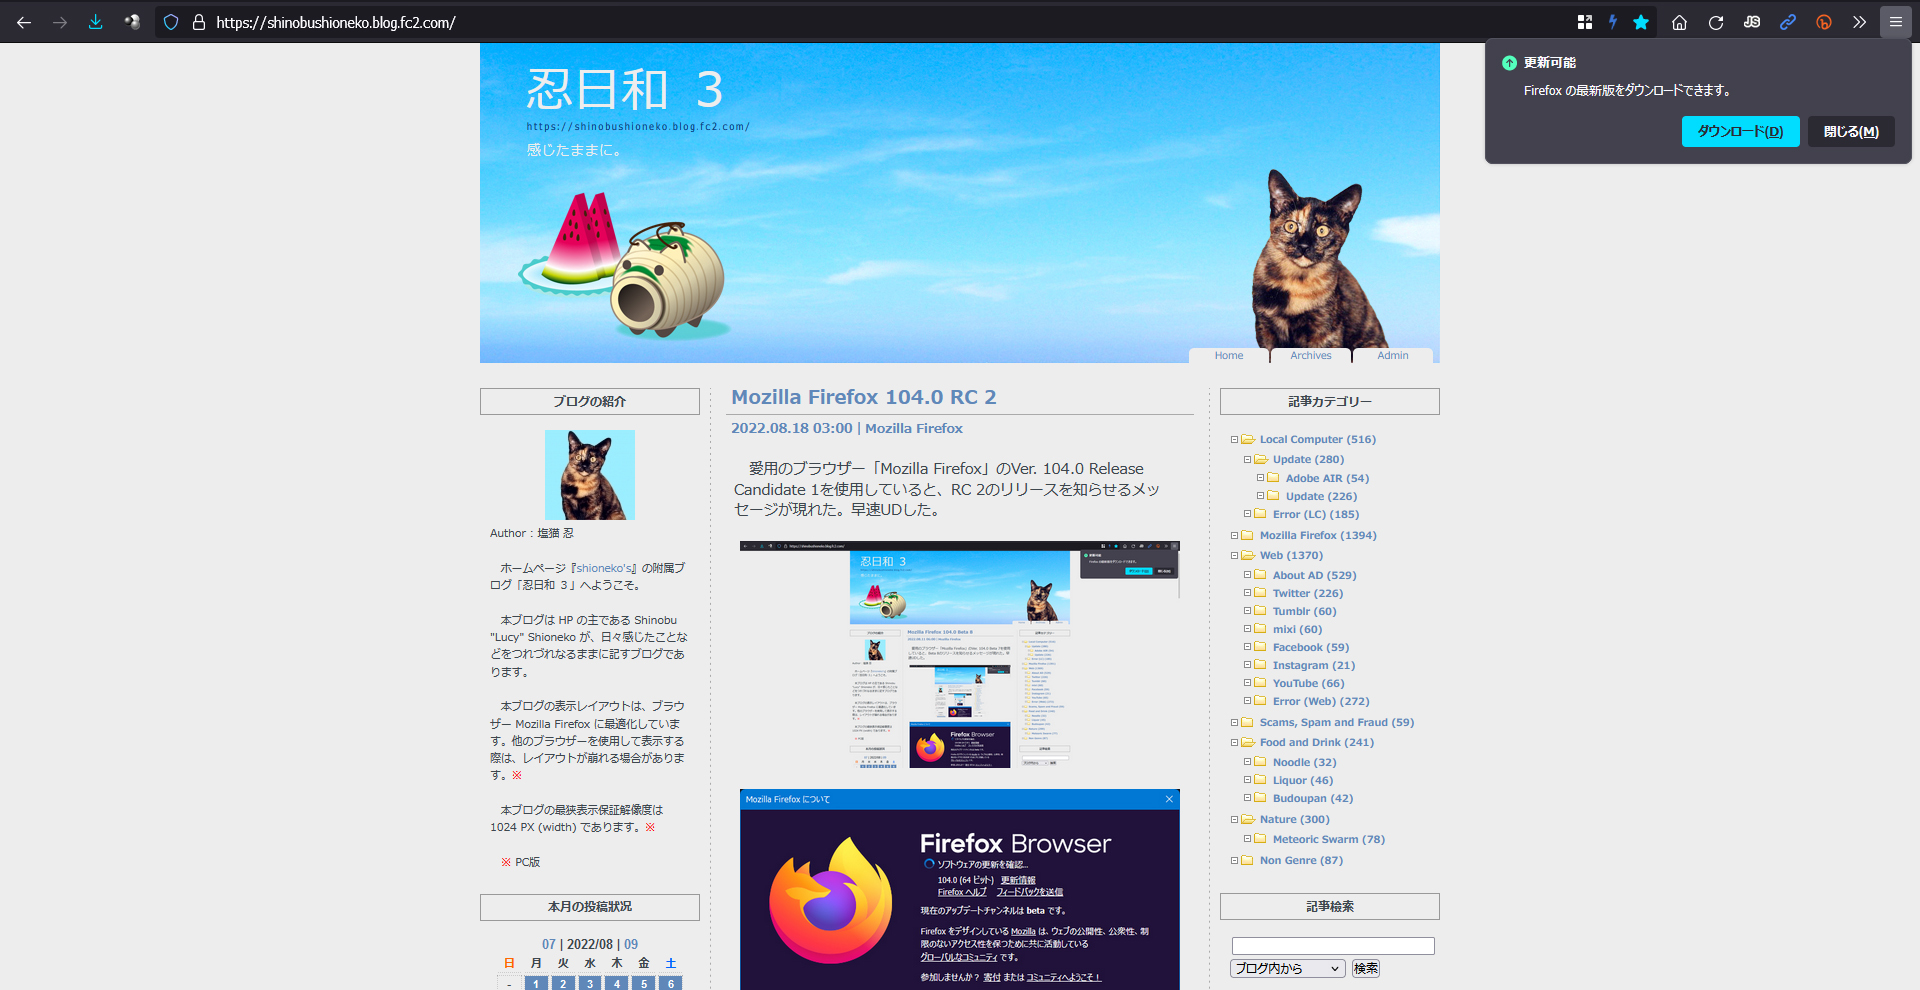 Mozilla Firefox 105.0 Beta 1